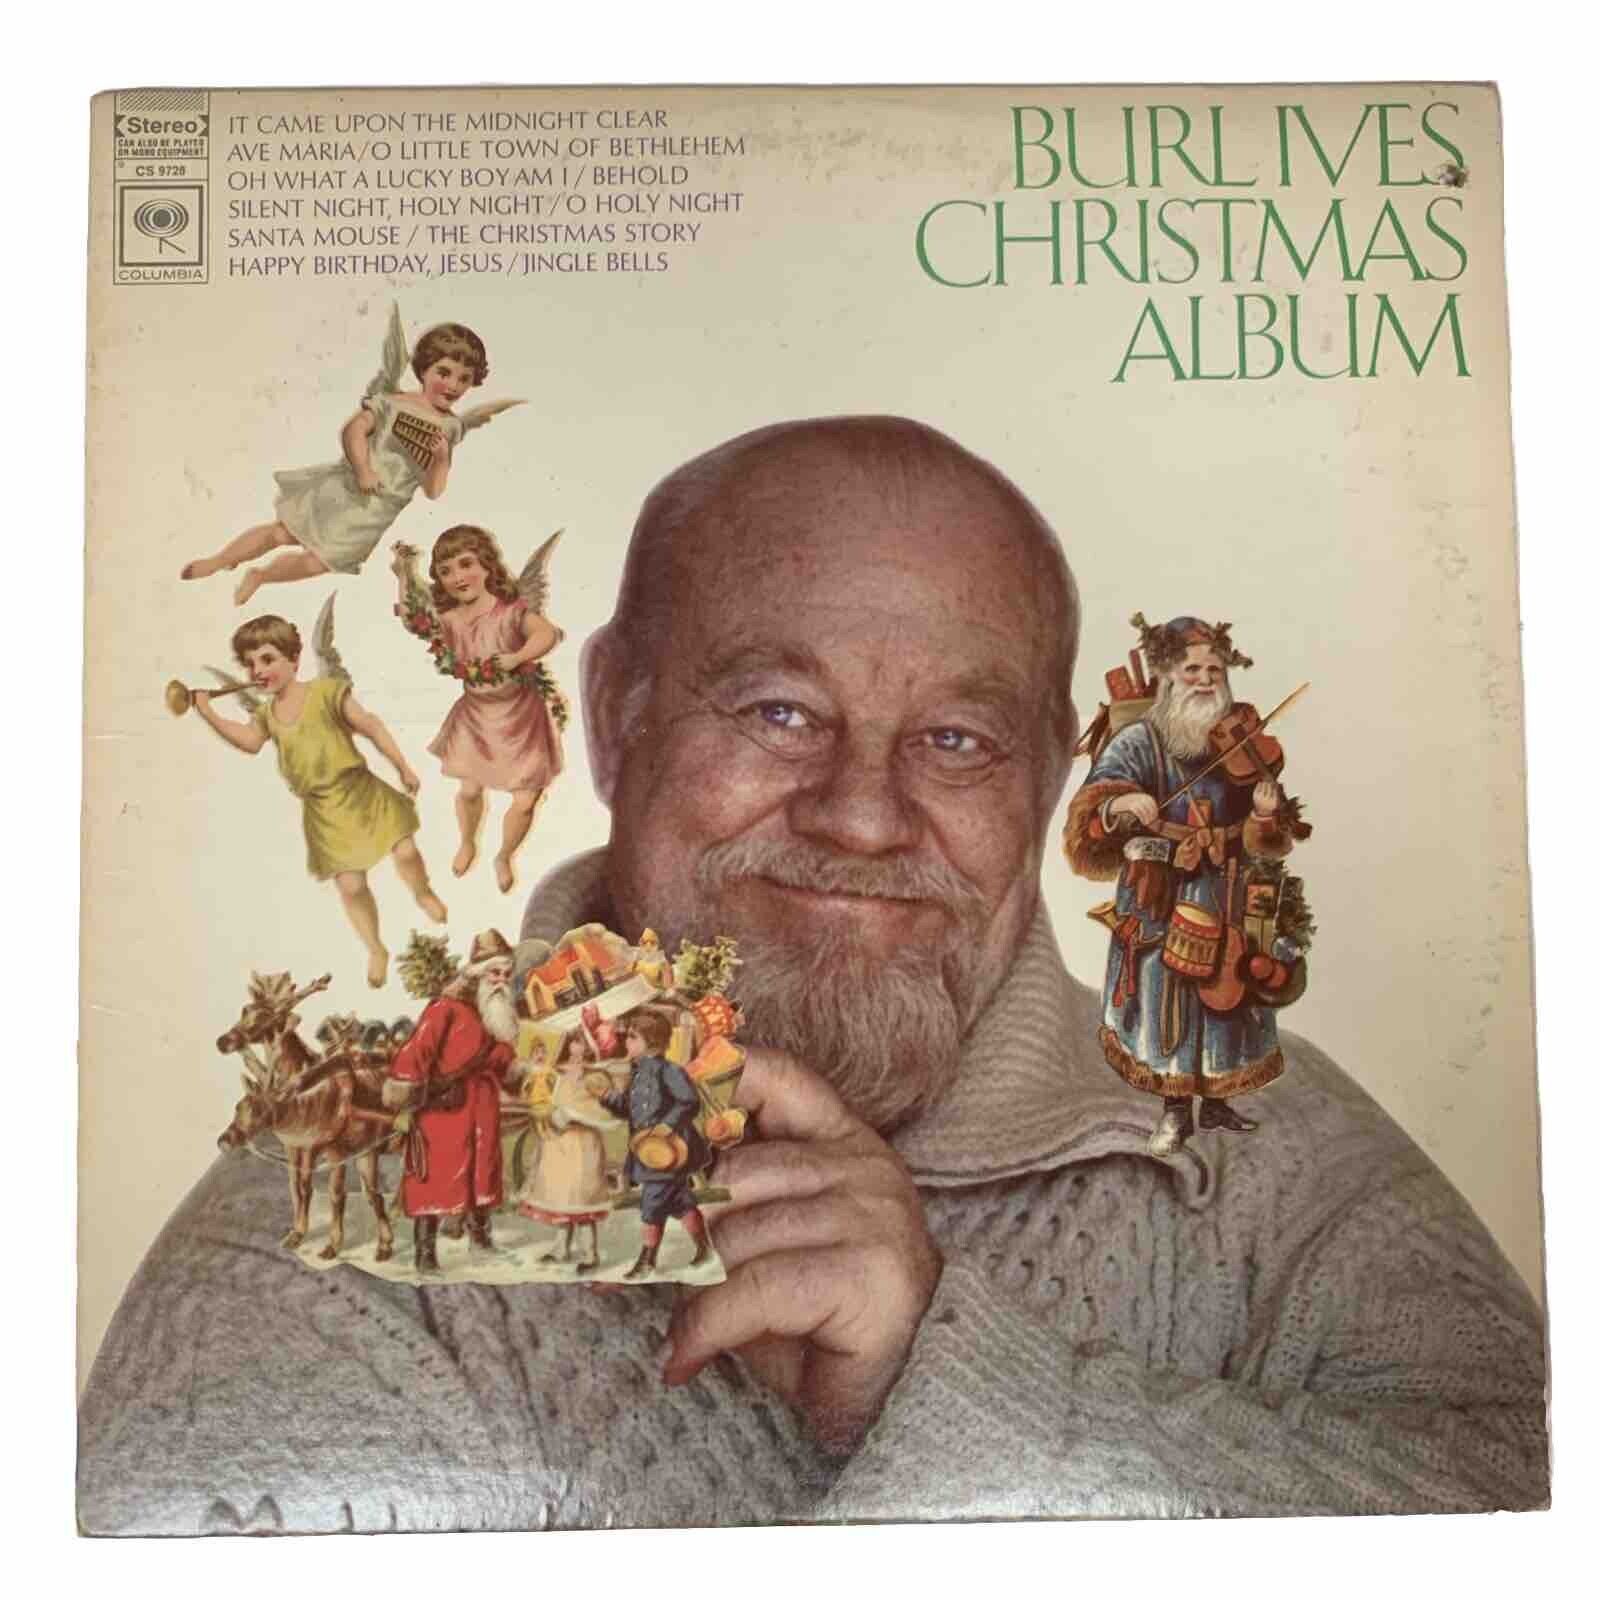 Burl Ives Christmas Album - Vinyl Record - 1968 - Tested